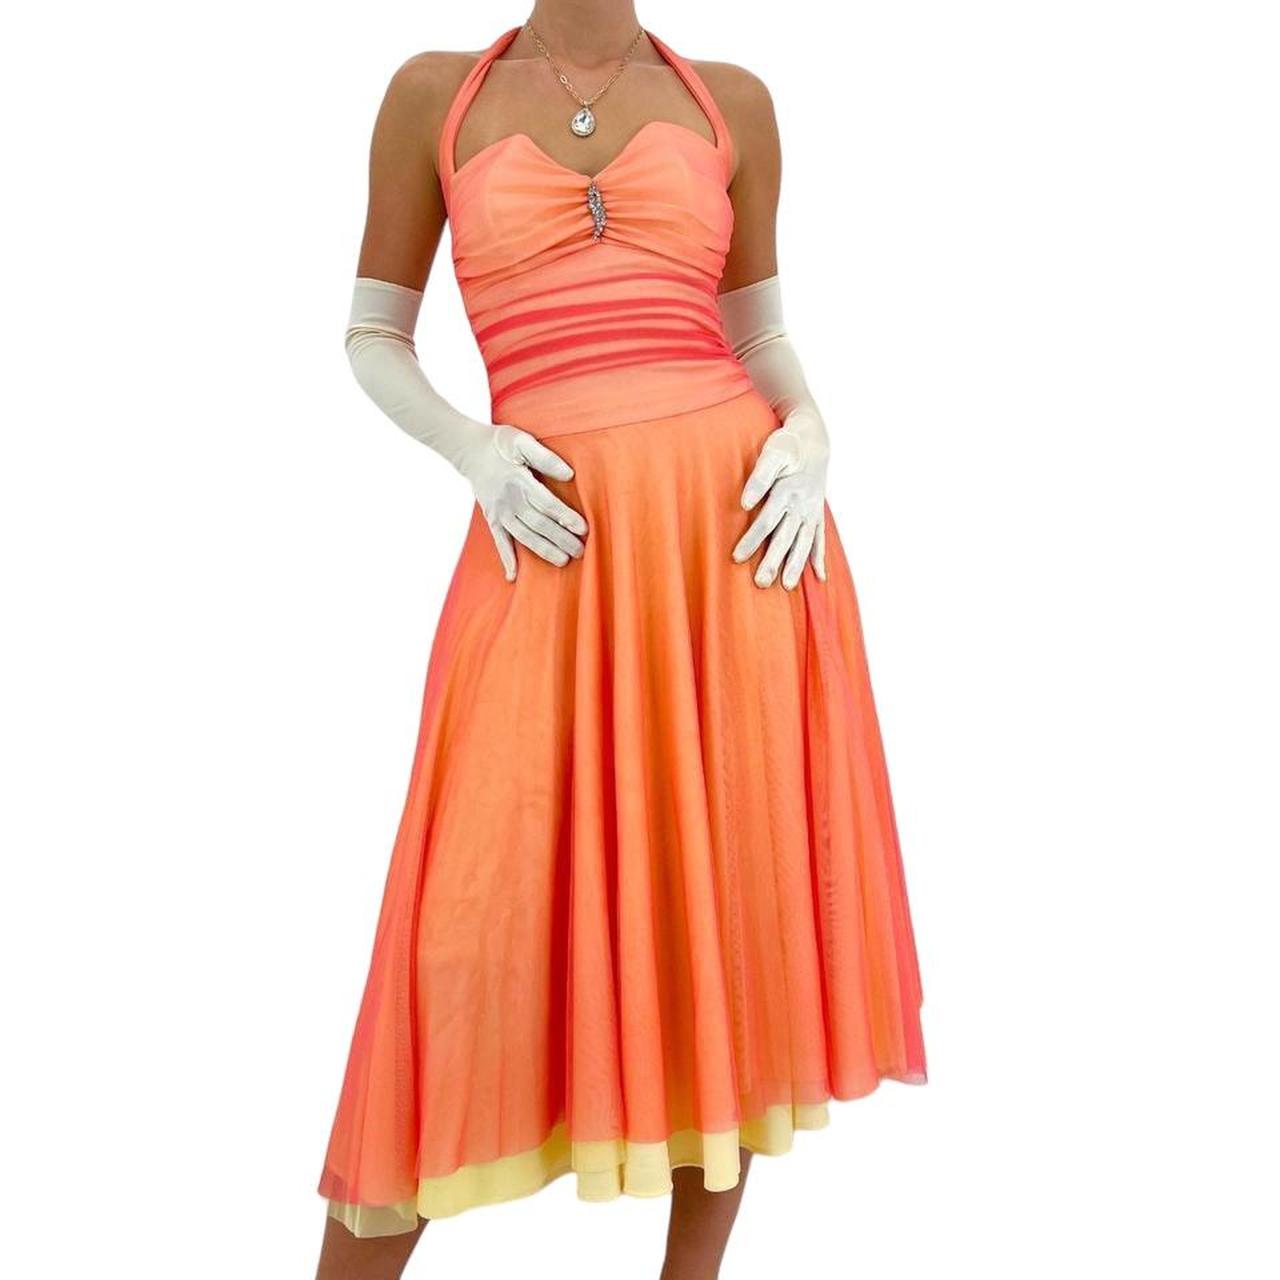 Y2k Vintage Orange + Yellow Formal Mesh Layered Dress w/ Silver Hardware [XS-S]